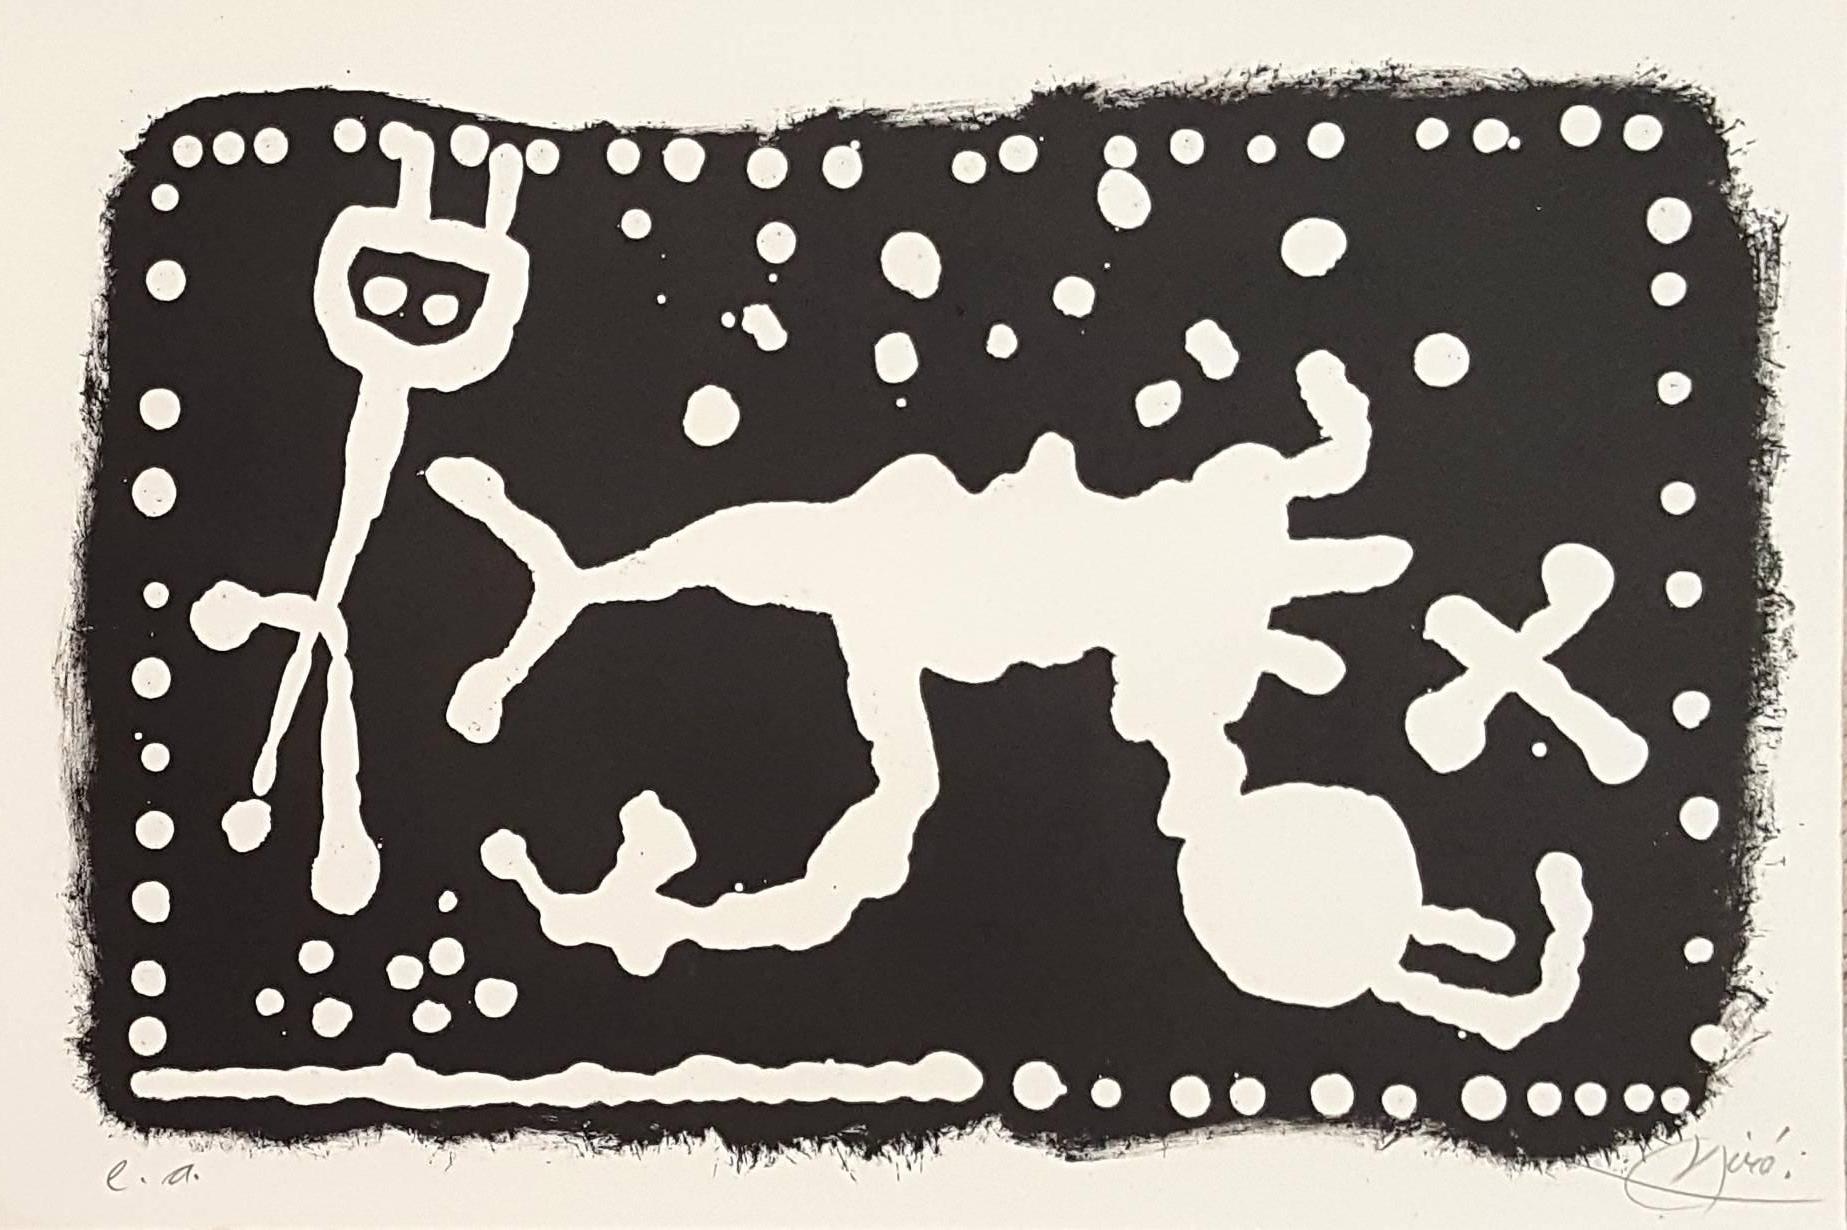 Joan Miró Abstract Print - Essai de Reserve III - Original Lithograph Handsigned - Very Rare